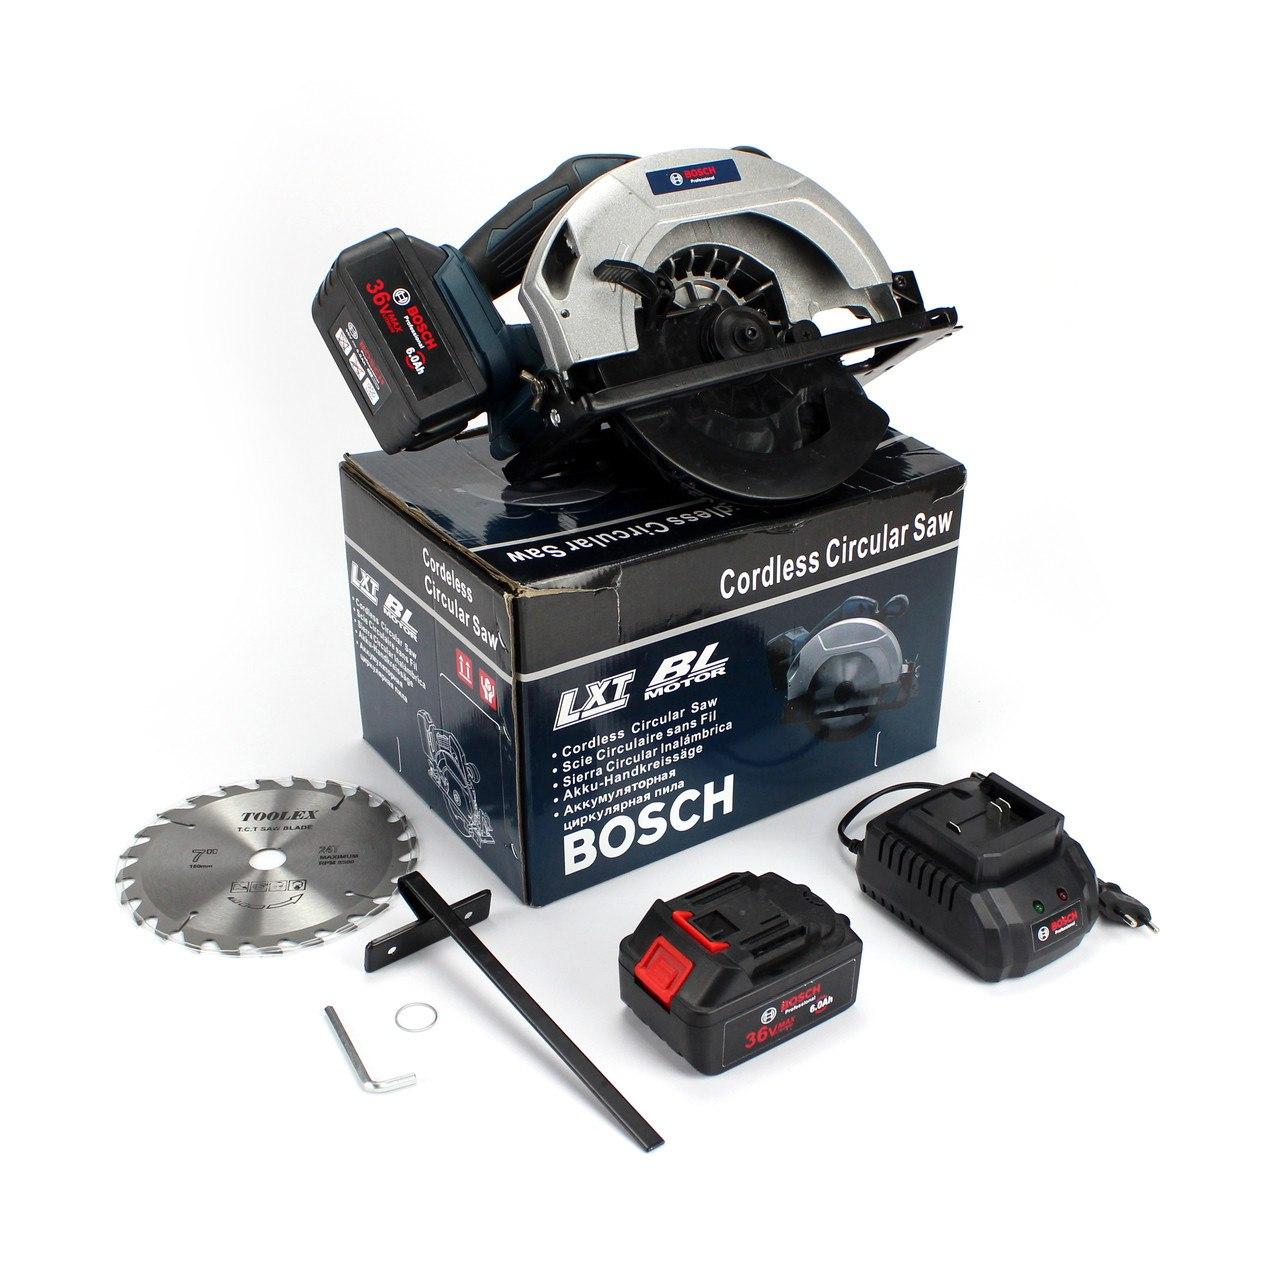 Циркулярна пилка Bosch акумуляторна GKS 36V-G (36V, 6Ah), Циркуляр БОШ, ручна циркулярка на акумуляторі